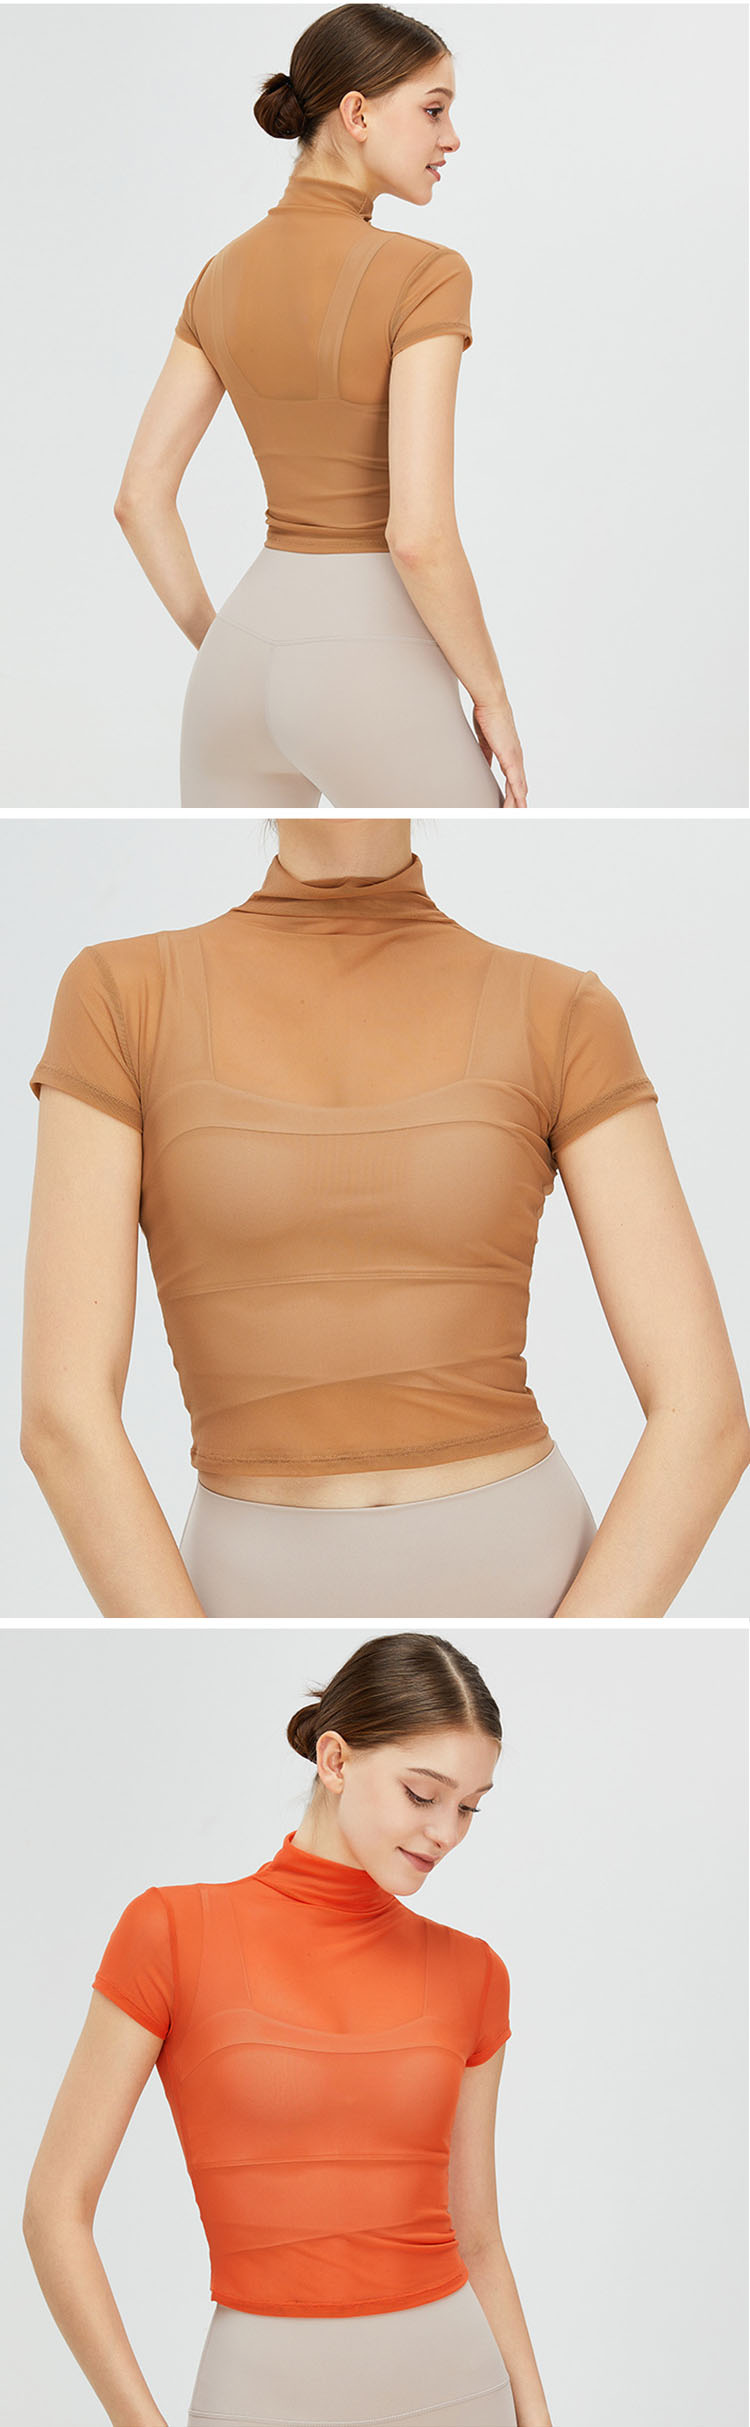 Slim-fit design, showing a sexy waist